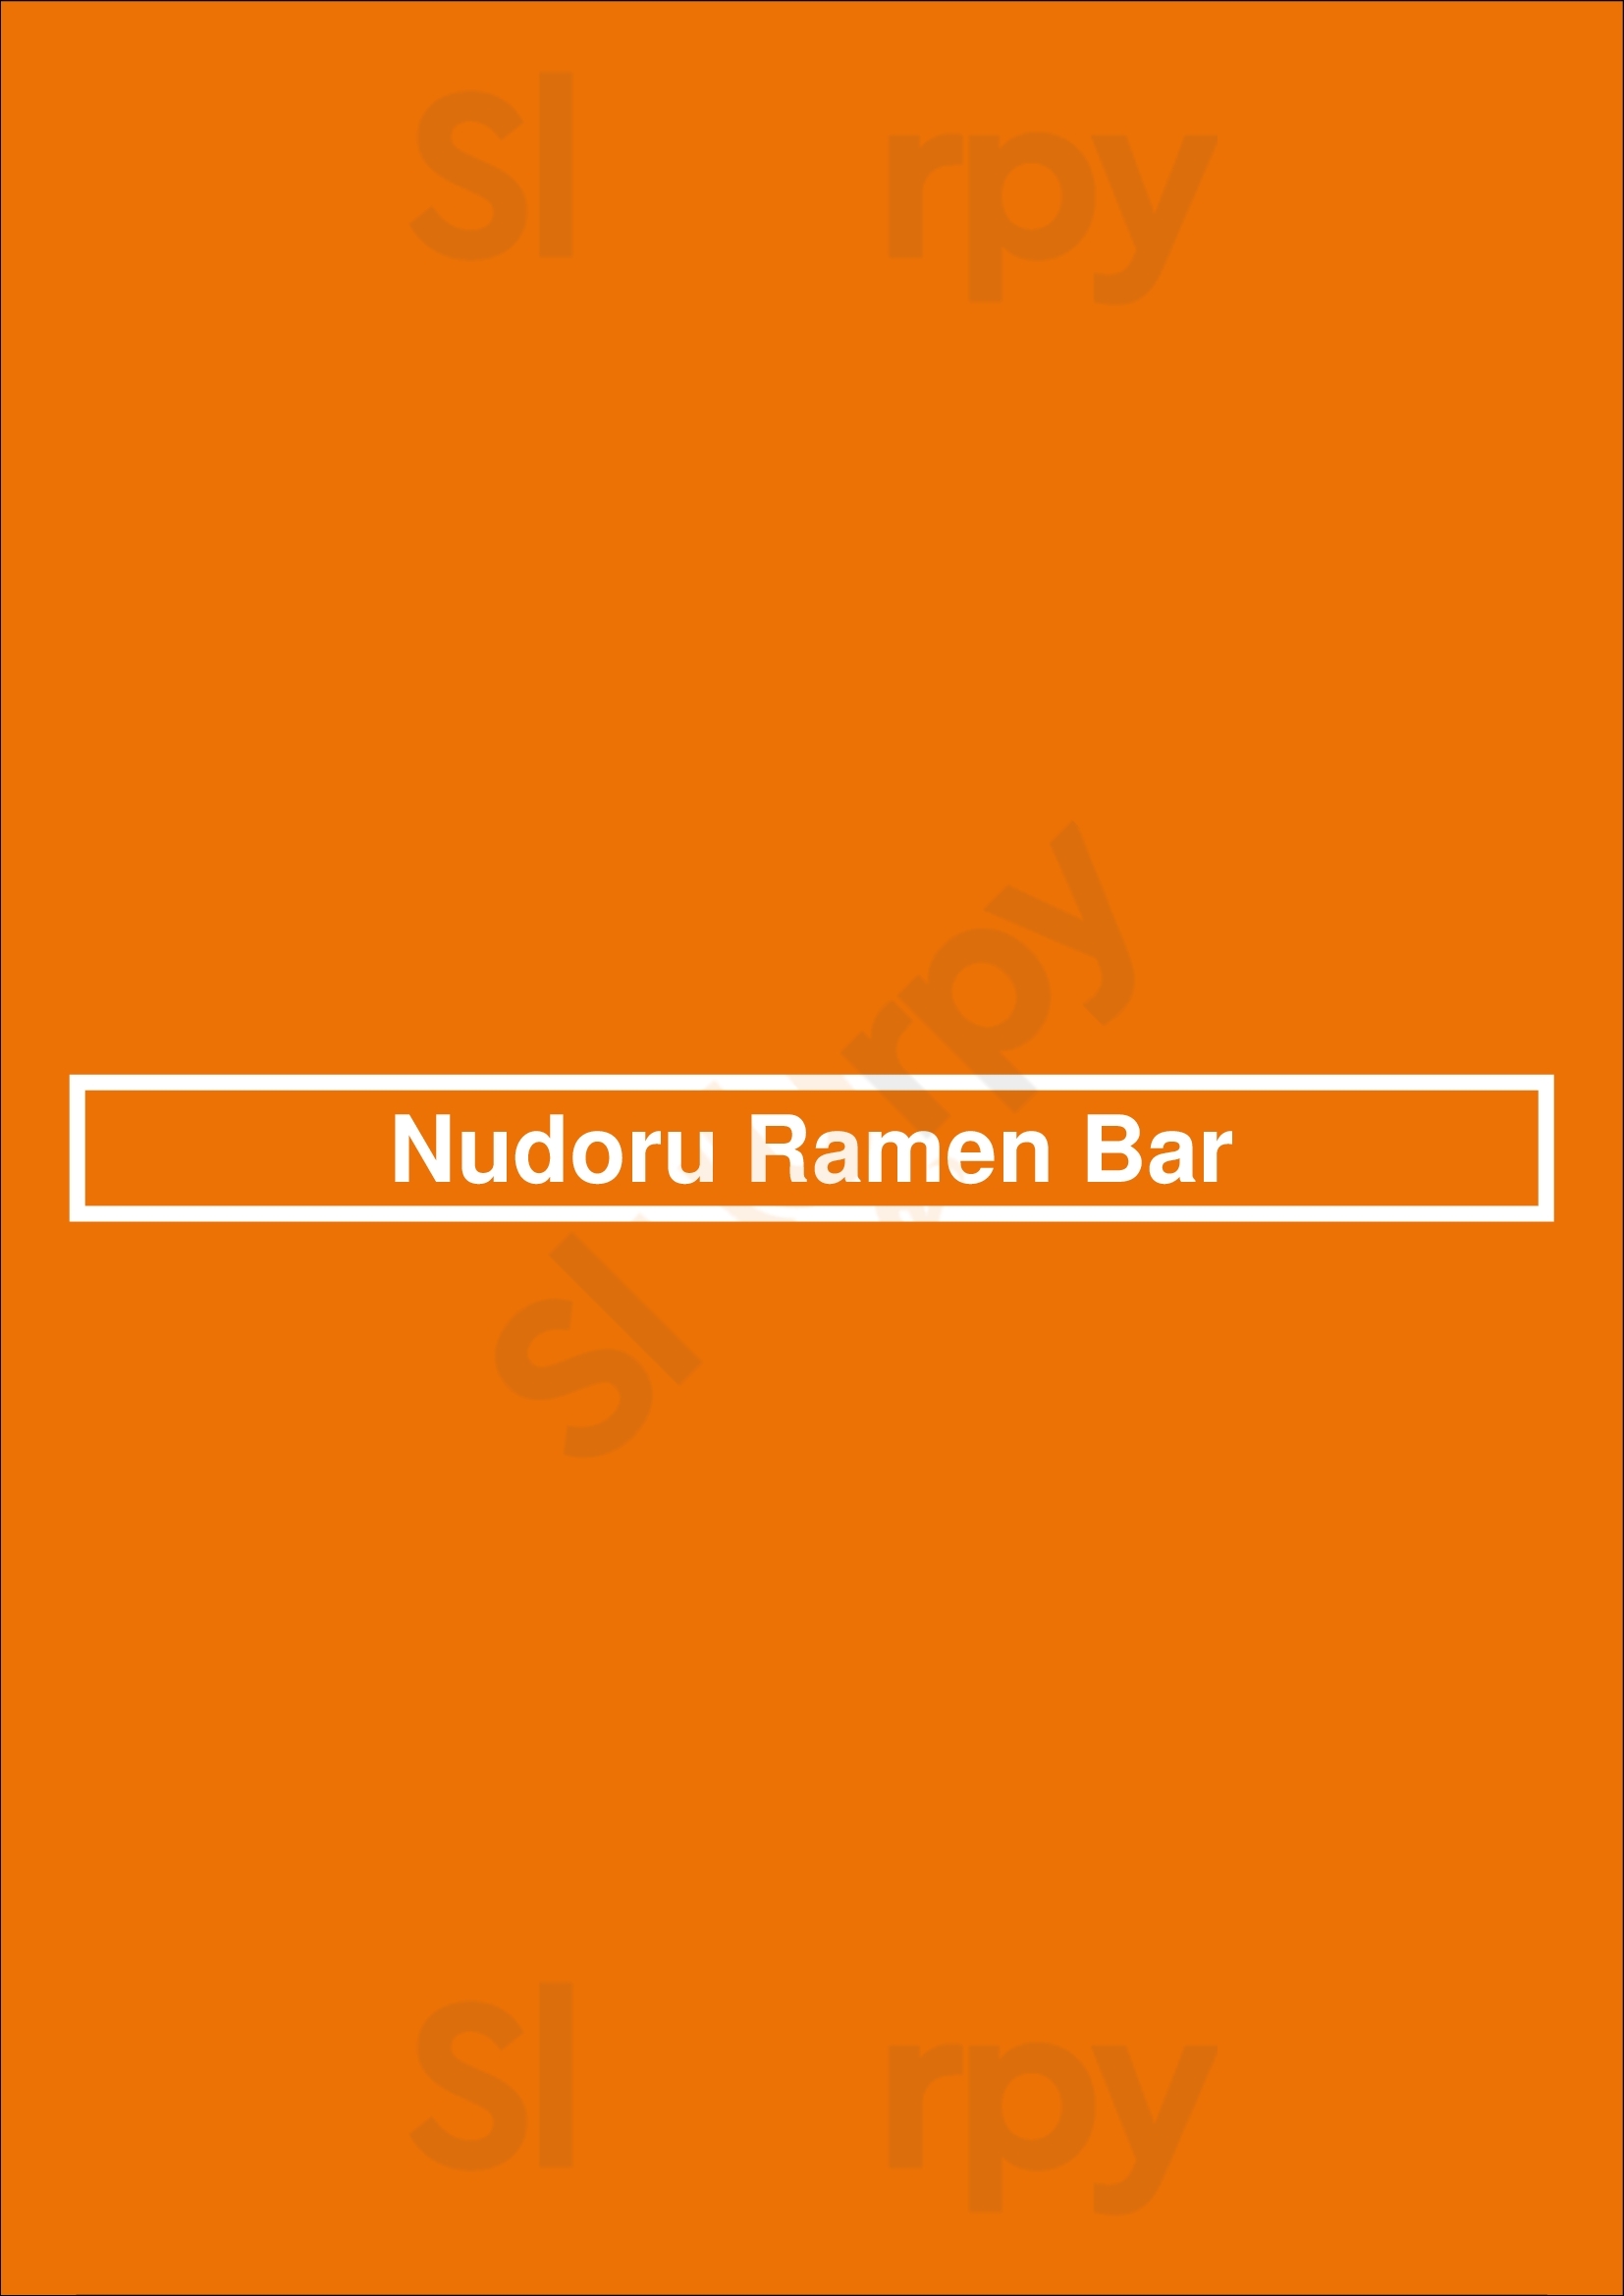 Nudoru Ramen Bar Edmonton Menu - 1